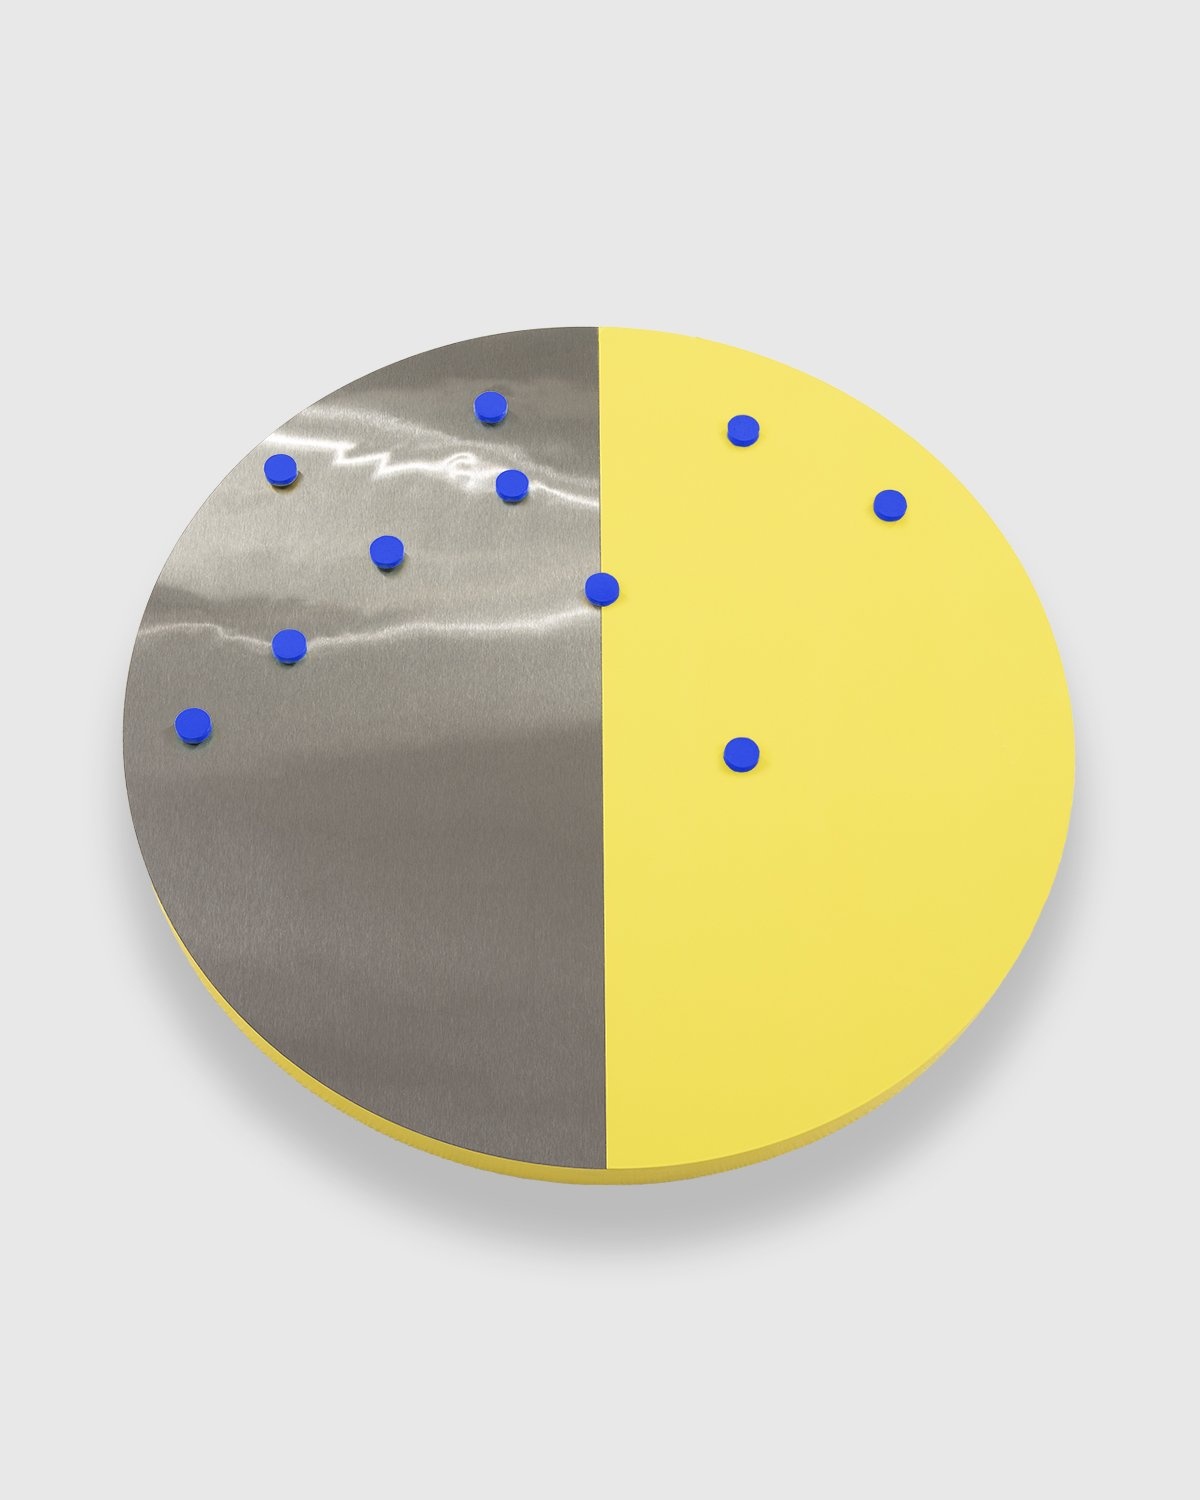 Fiverr – Wall Mounted Mood Board Yellow - Wall Decor - Multi - Image 2